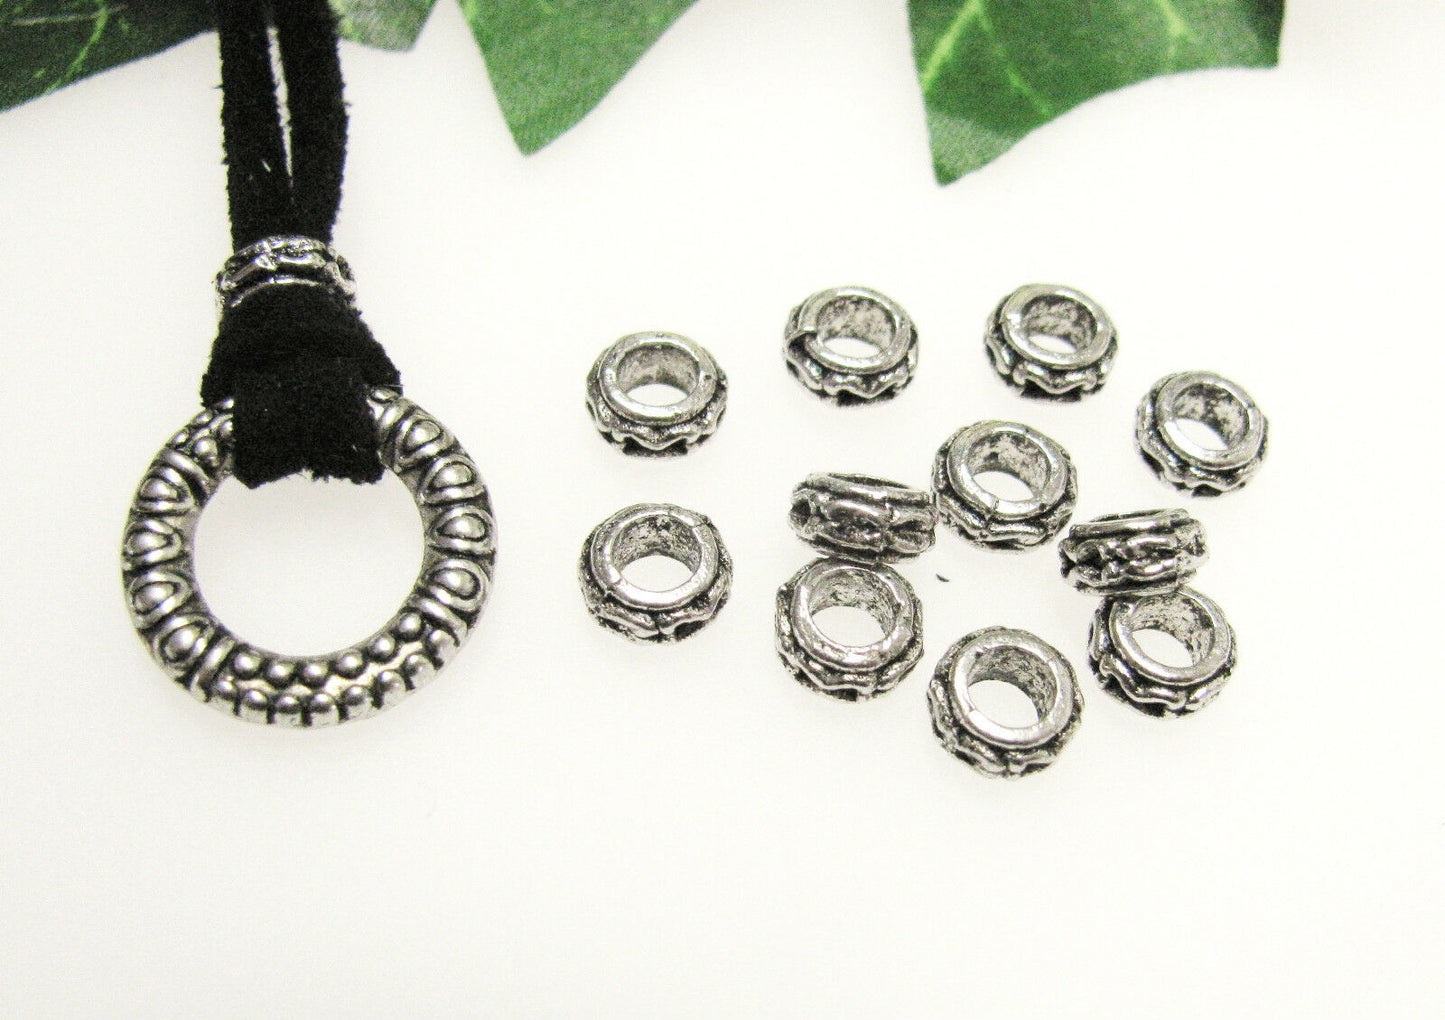 15 Metallperlen, Rondelle, 7 x 3,5 mm, Zwischenperle in silber, Perlen basteln